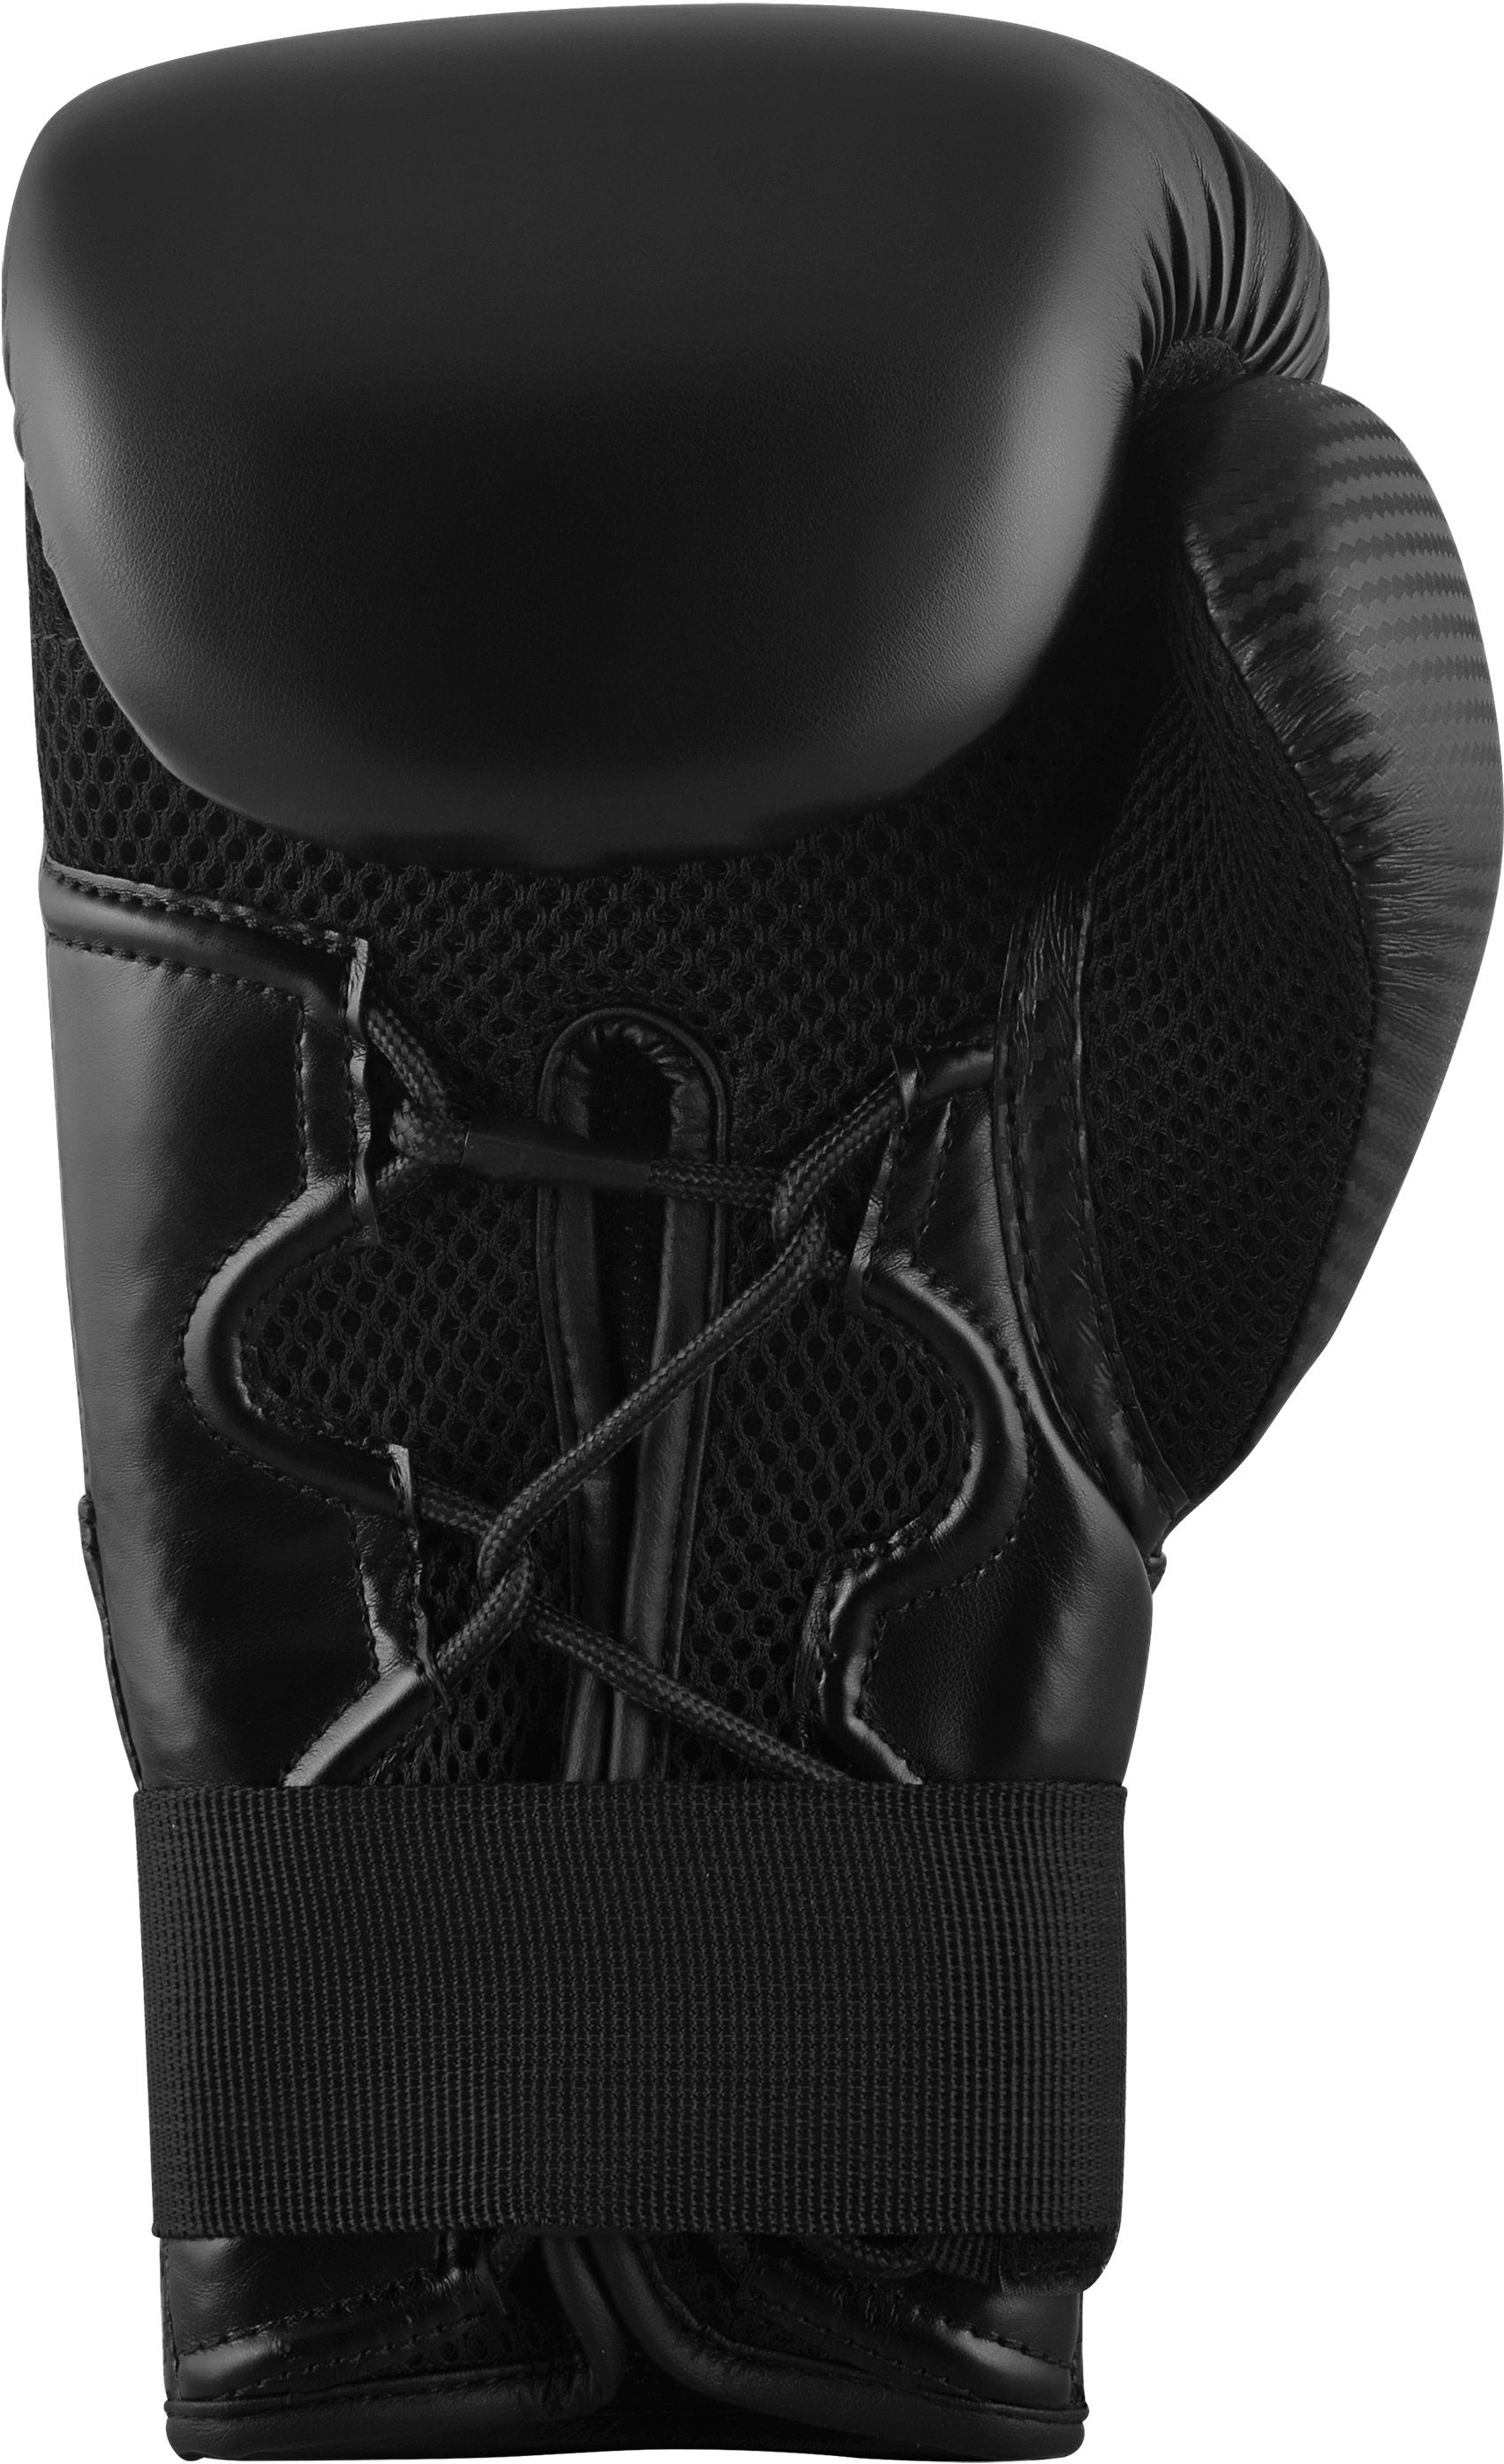 Performance adidas schwarz Boxhandschuhe